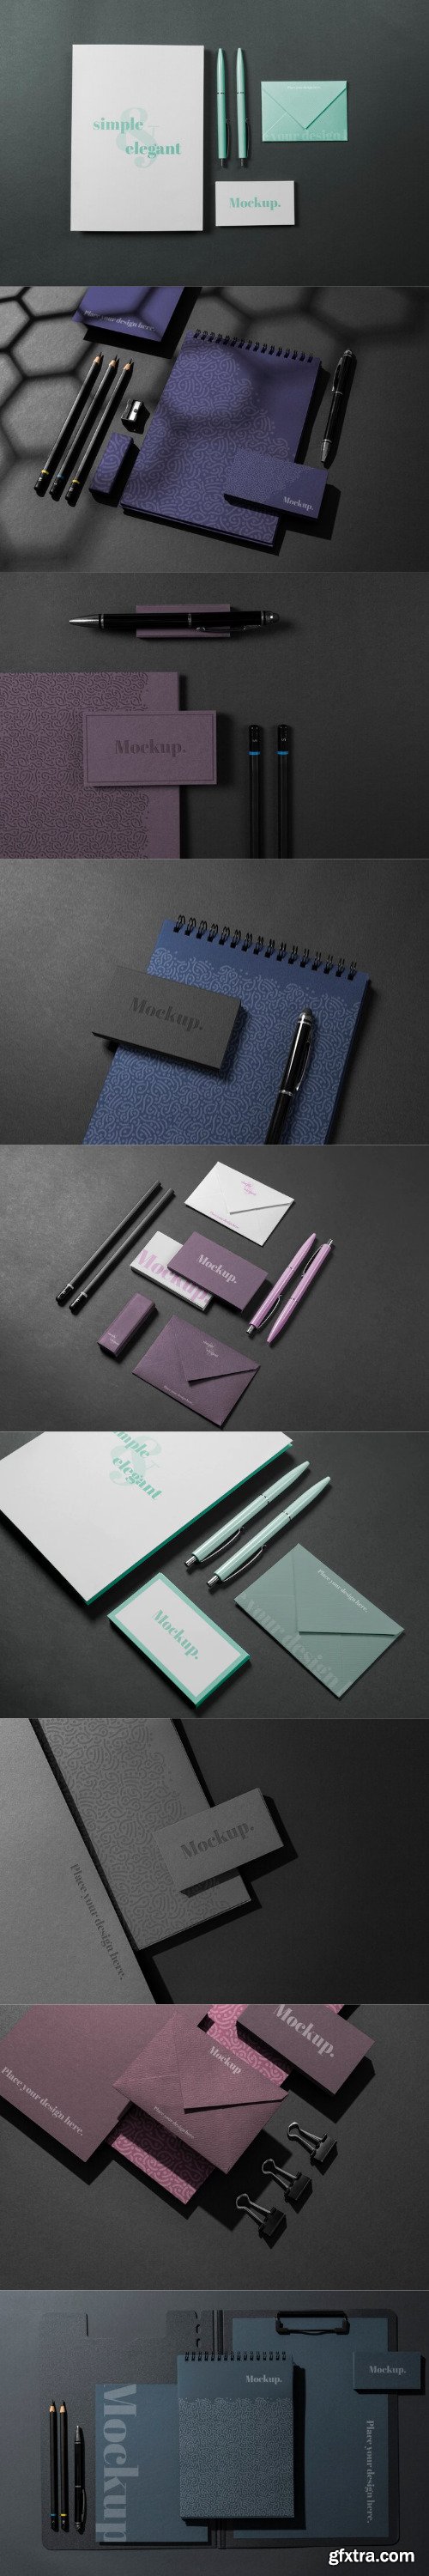 Flat lay elegant stationery arrangement mockup design